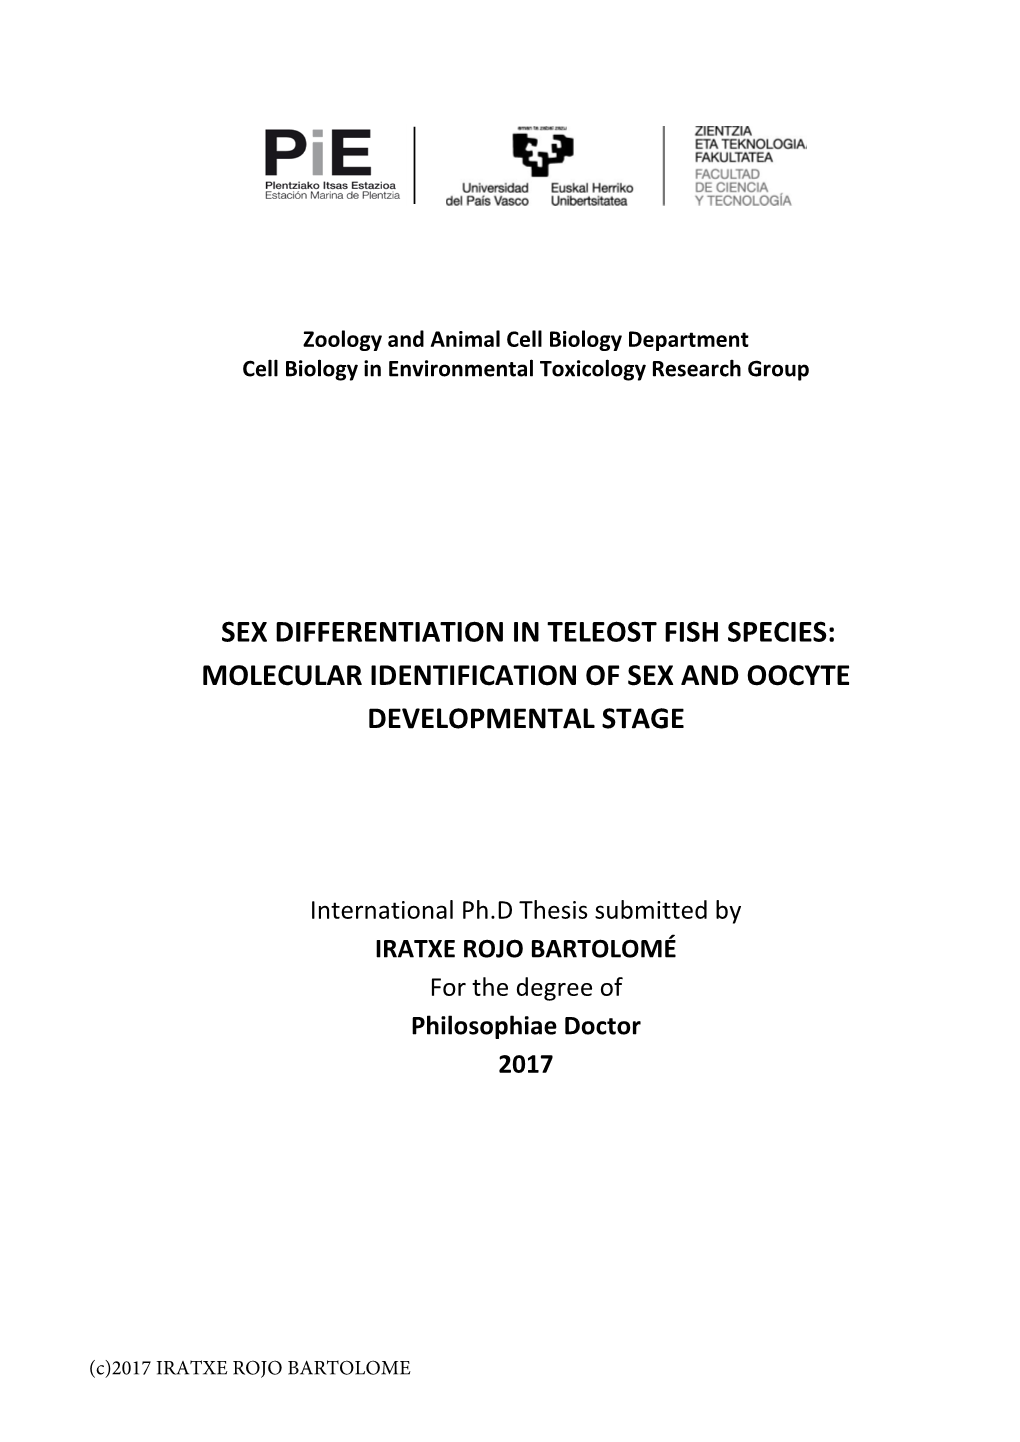 Sex Differentiation in Teleost Fish Species: Molecular Identification of Sex and Oocyte Developmental Stage